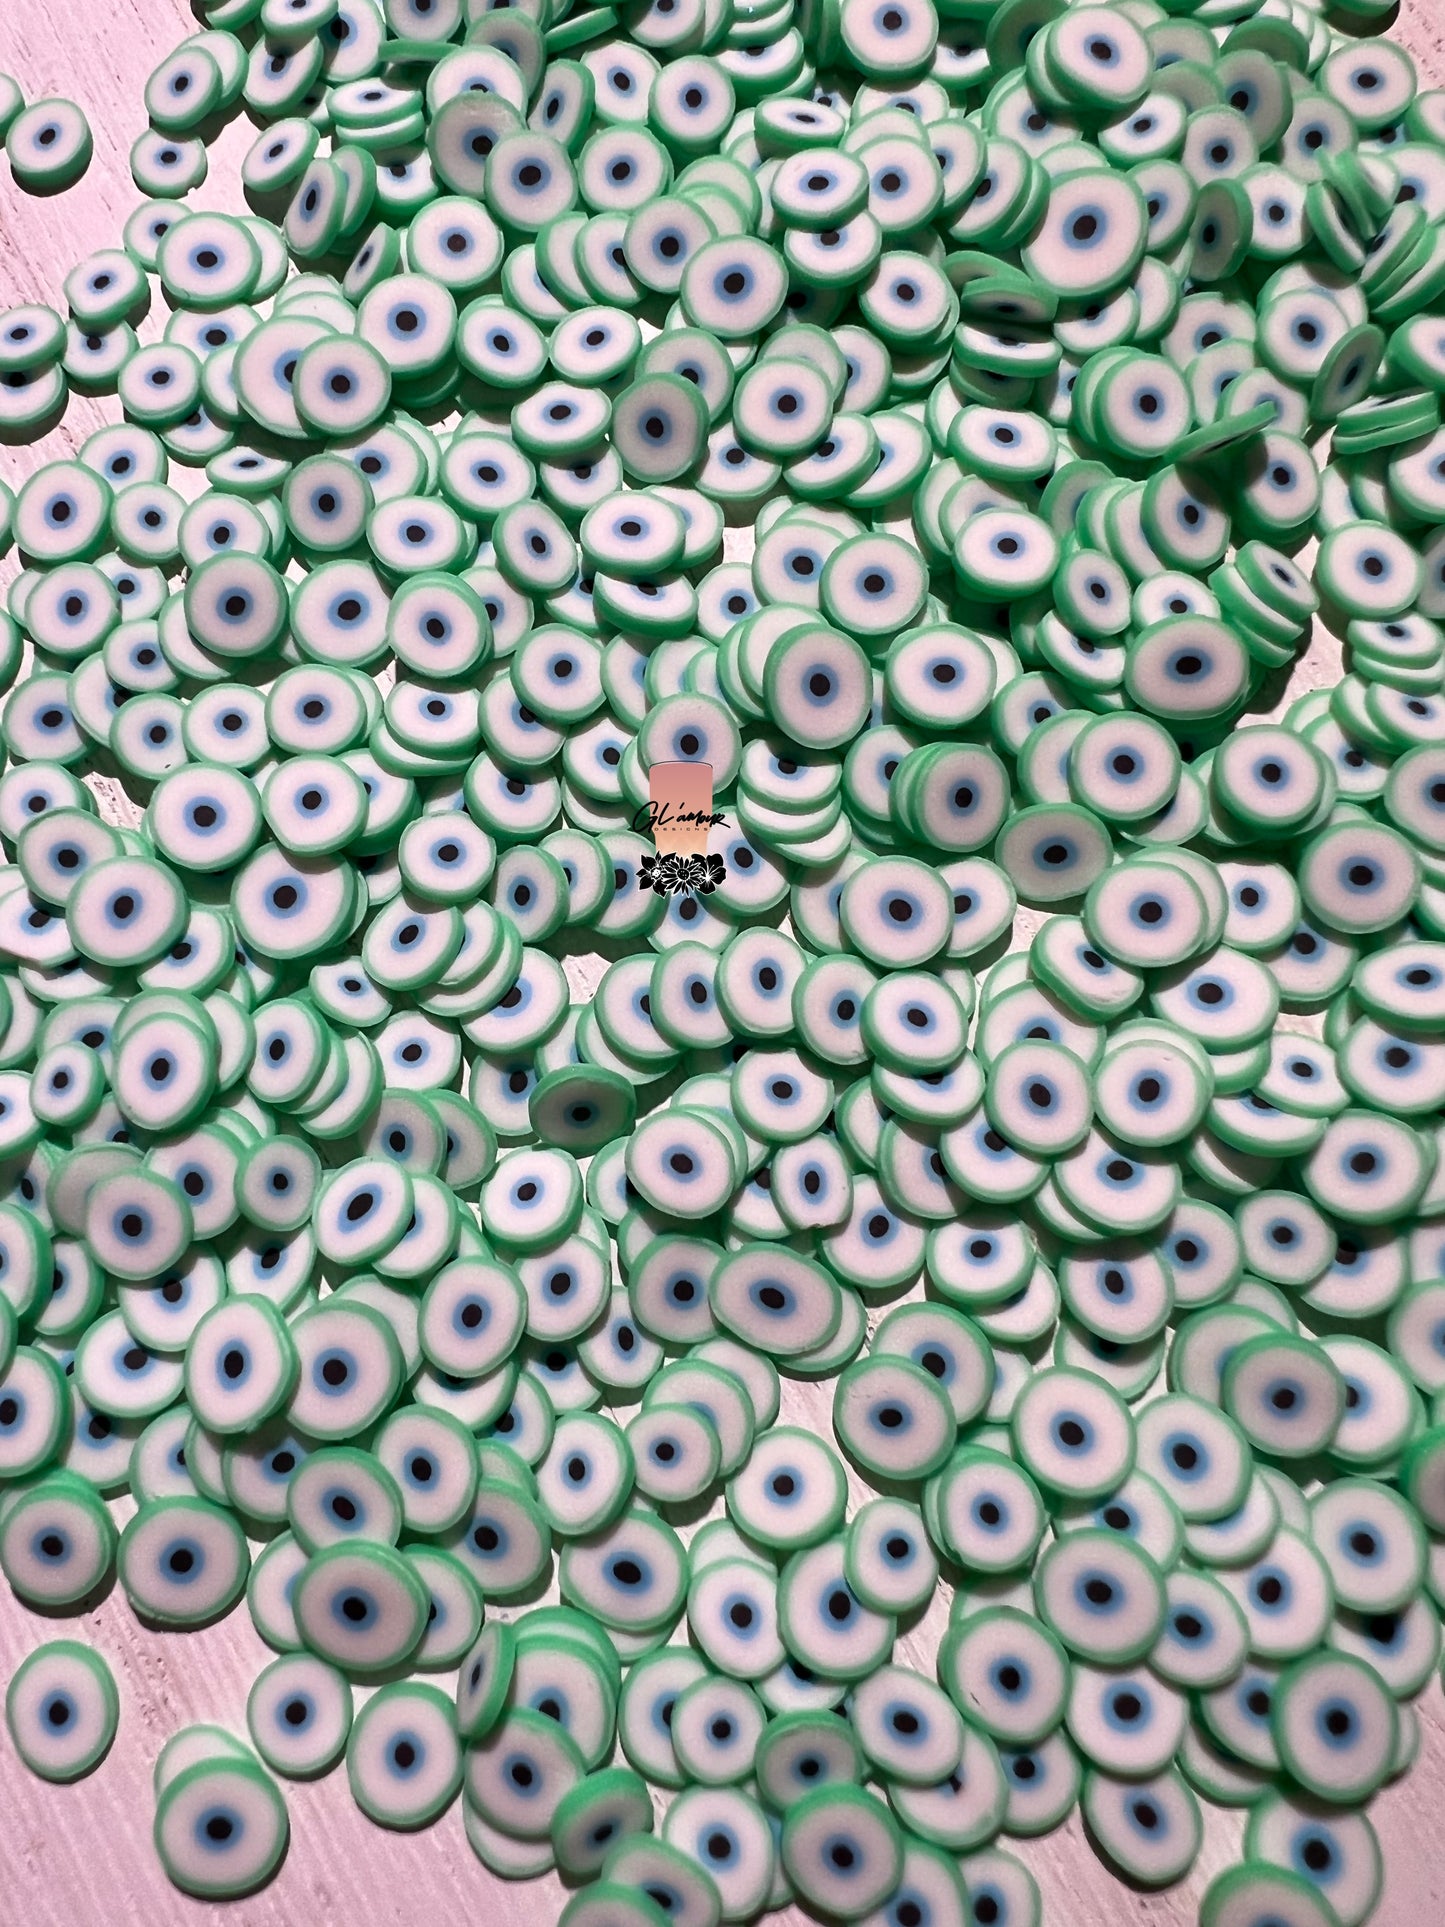 5mm Green Ojo (Eyeball) Polymer Slices -small